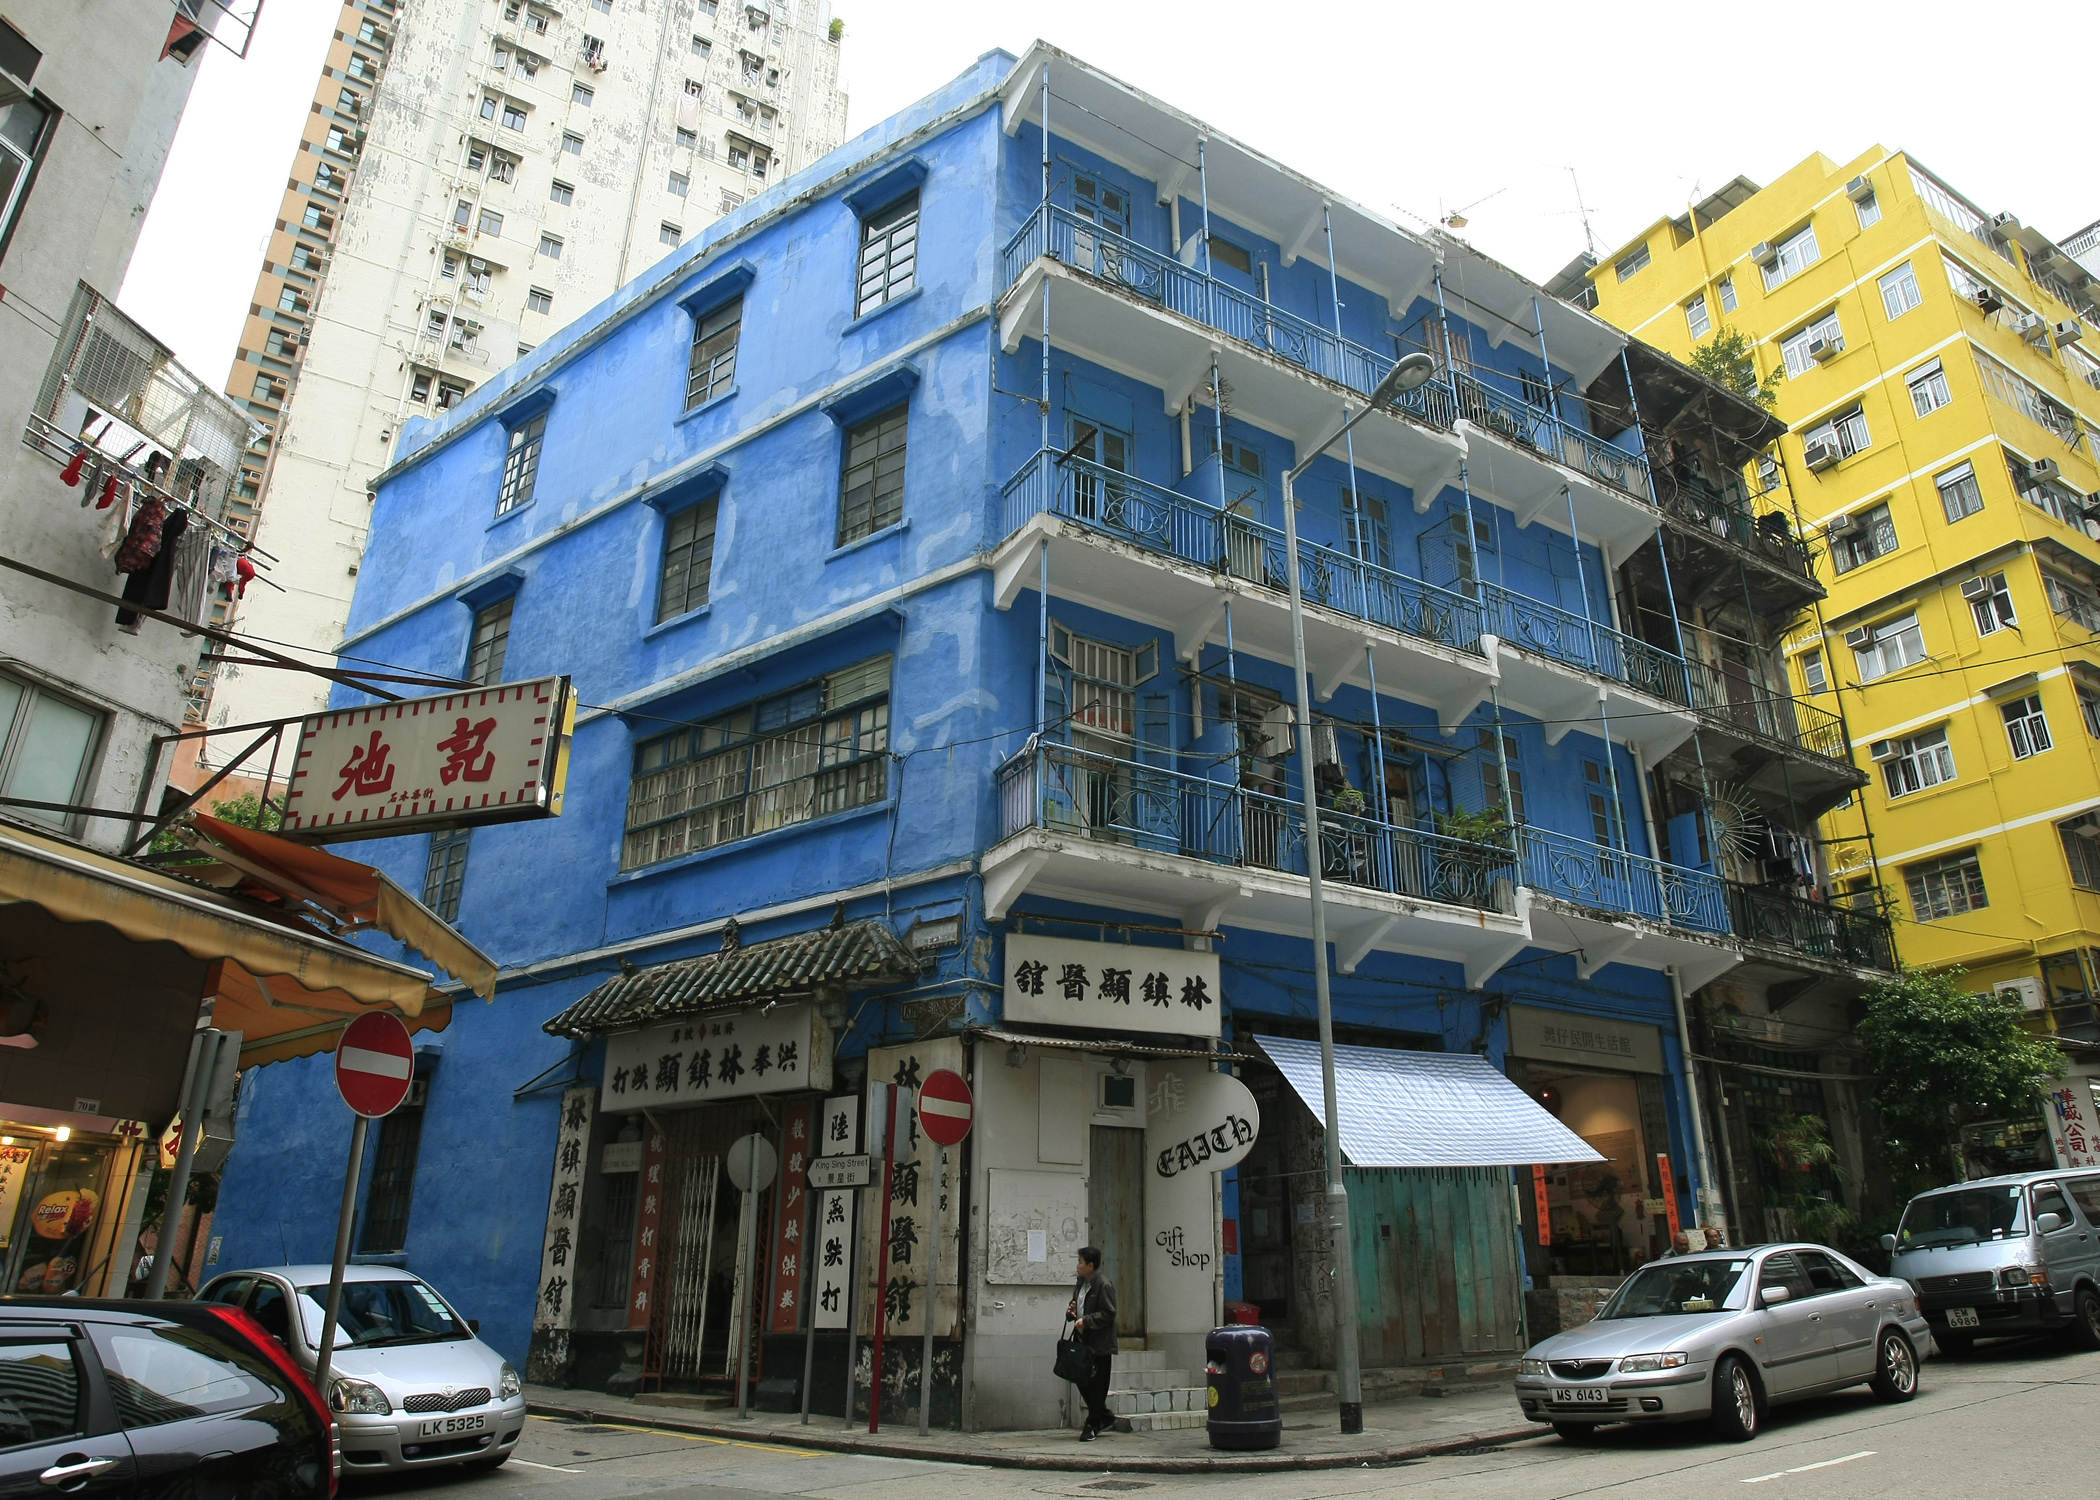 https://www.heritage.gov.hk/filemanager/heritage/en/content_117/bhc-photo-01.jpg